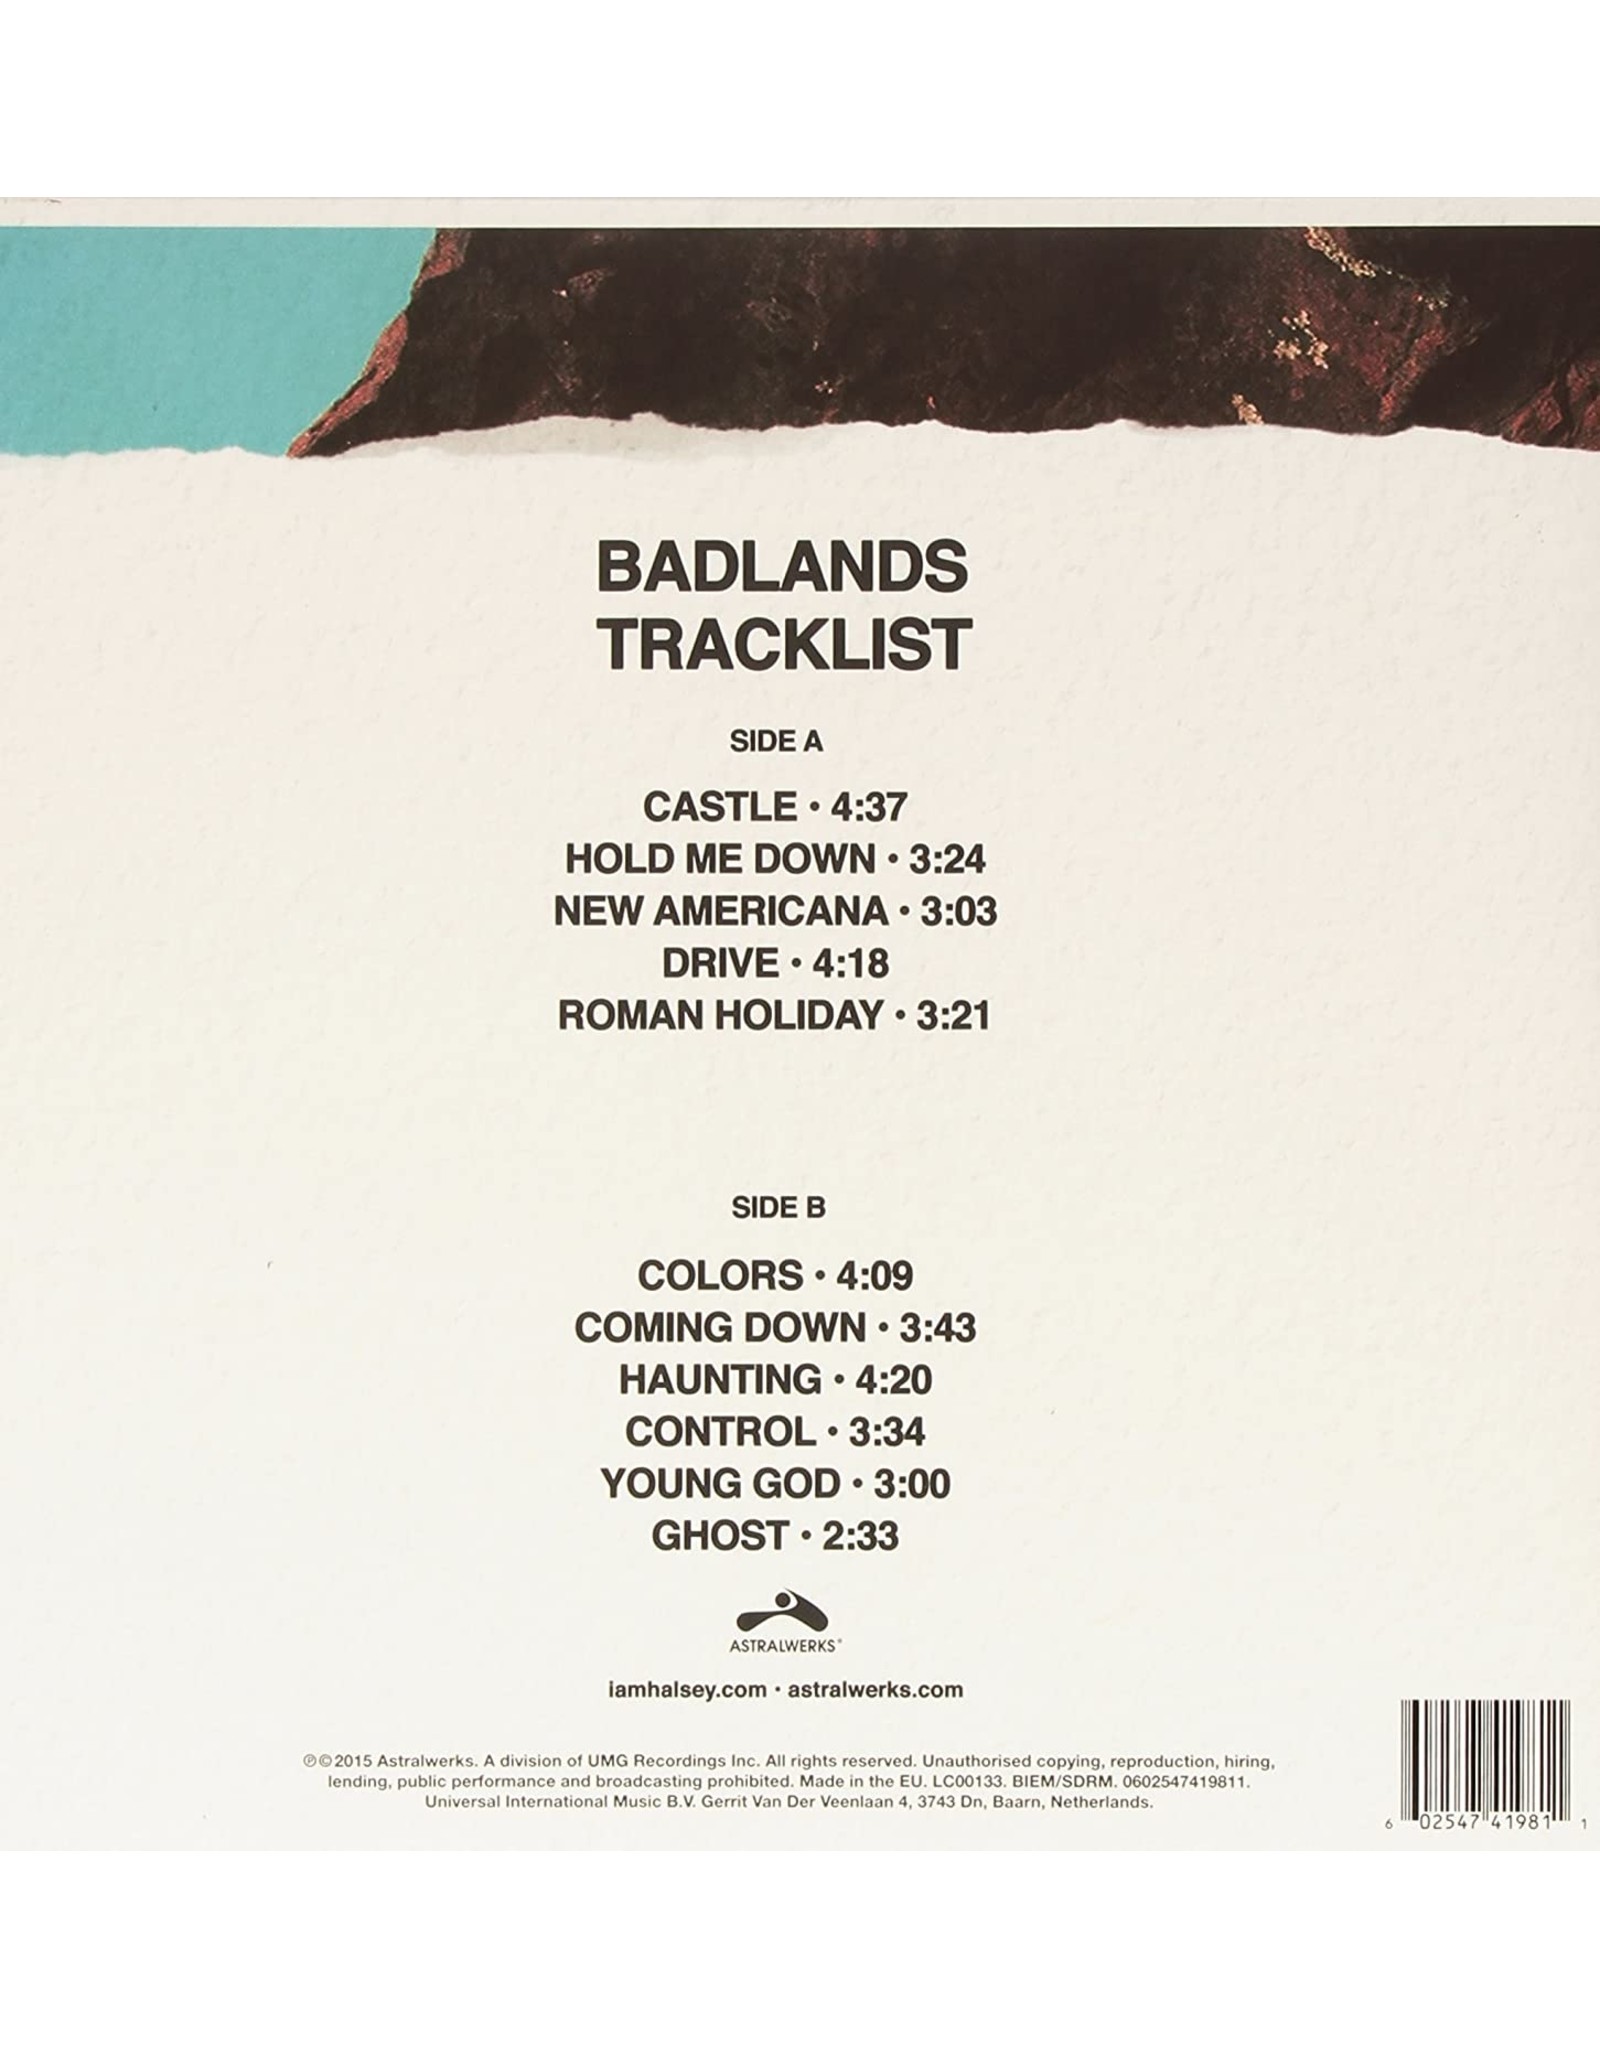 Halsey - Badlands (Pink Vinyl)